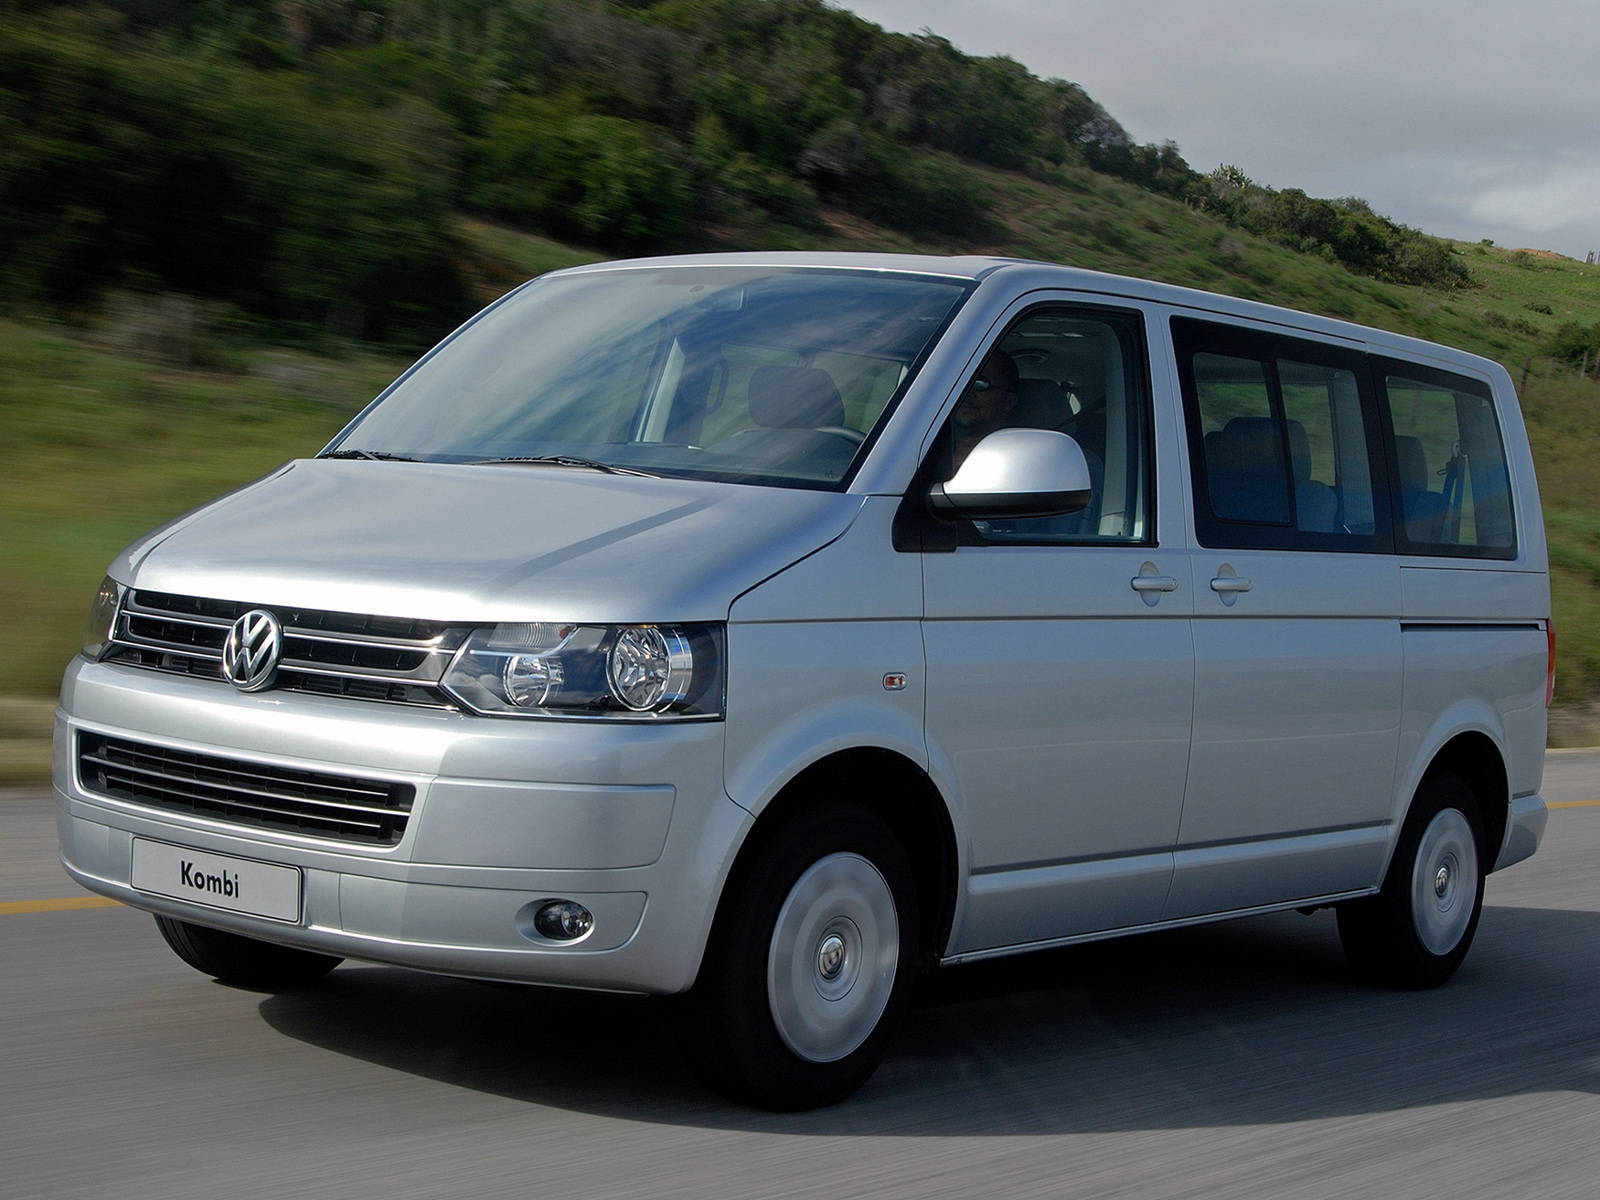 Volkswagen Transporter: Iconic Van for Israeli Businesses